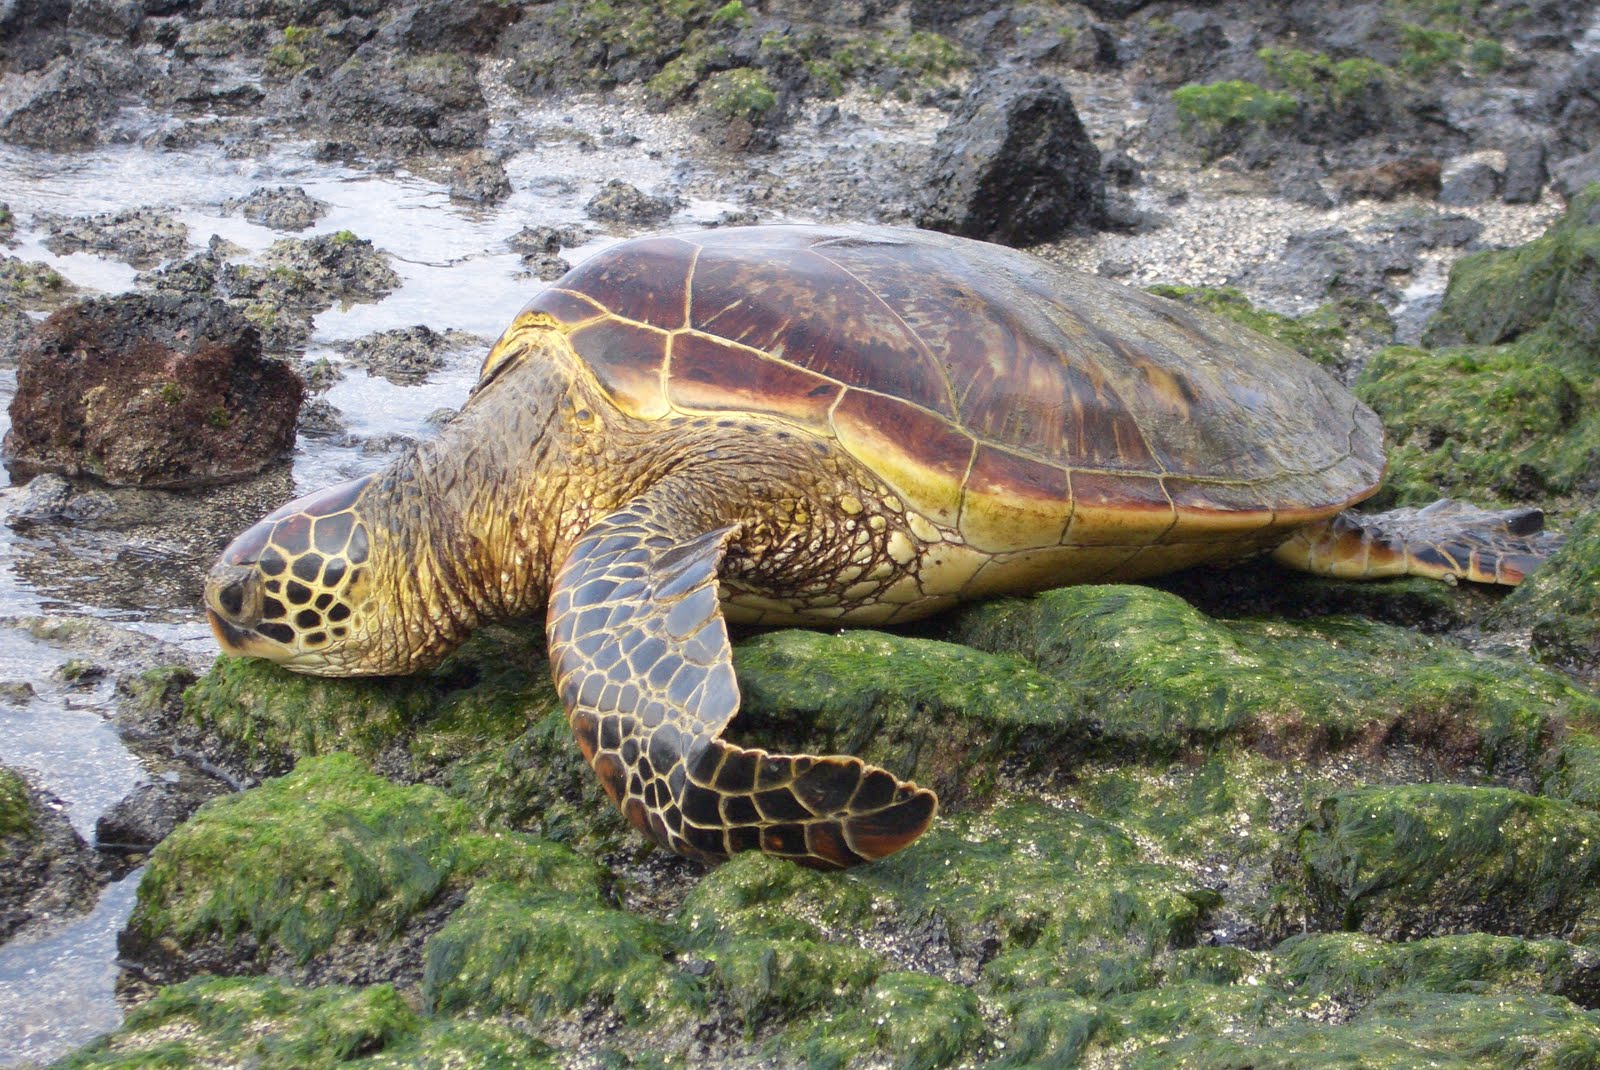 http://4.bp.blogspot.com/-edX3UYcjWpY/TkYwalVyBpI/AAAAAAAABwY/4SaW8KbGI50/s1600/green+sea+turtles+on+land-3.jpg